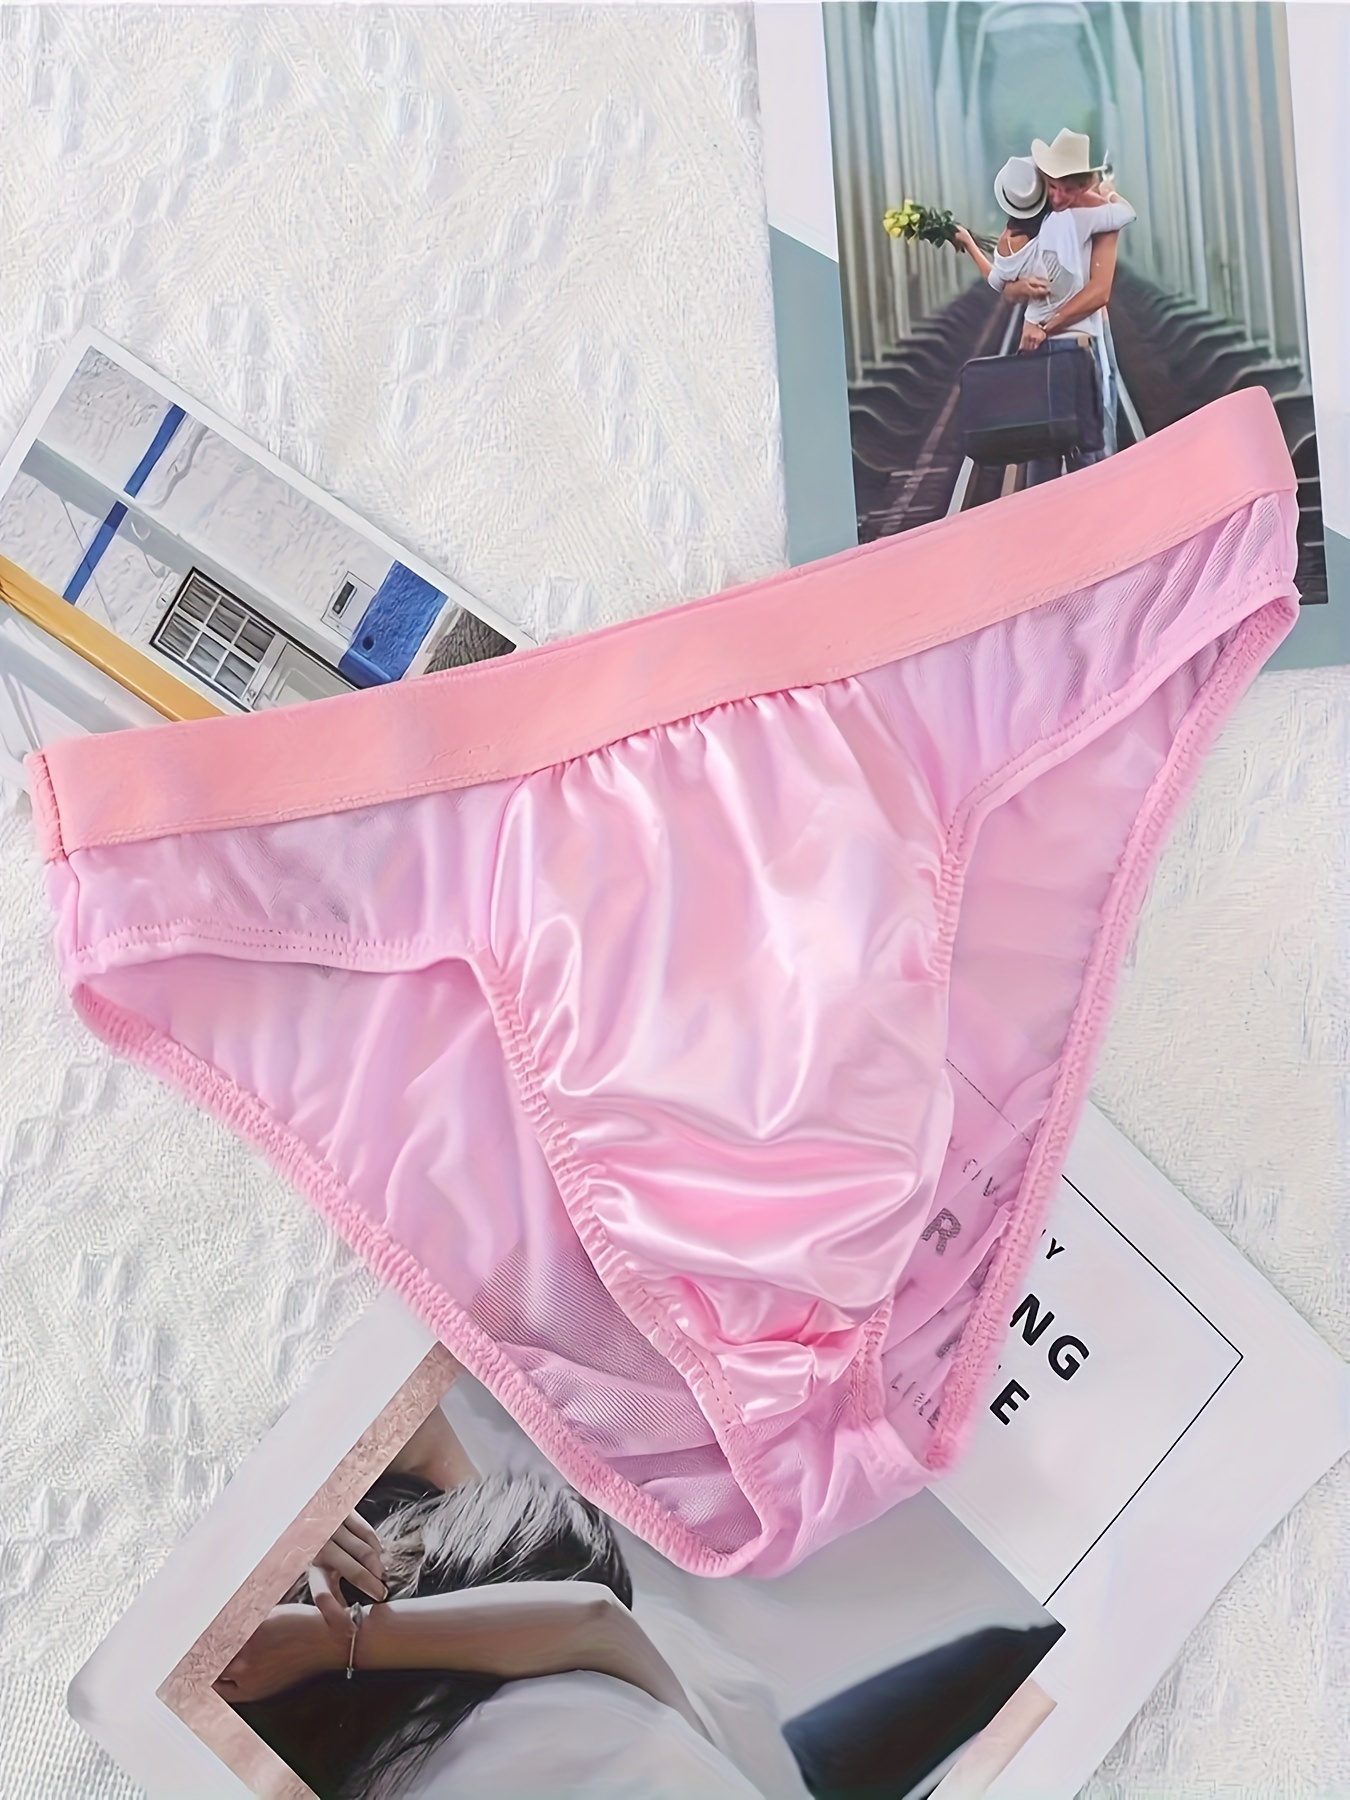 Women's Low Waist Sheer Mesh See-through Panties Girls' Trunks Briefs  Underwear